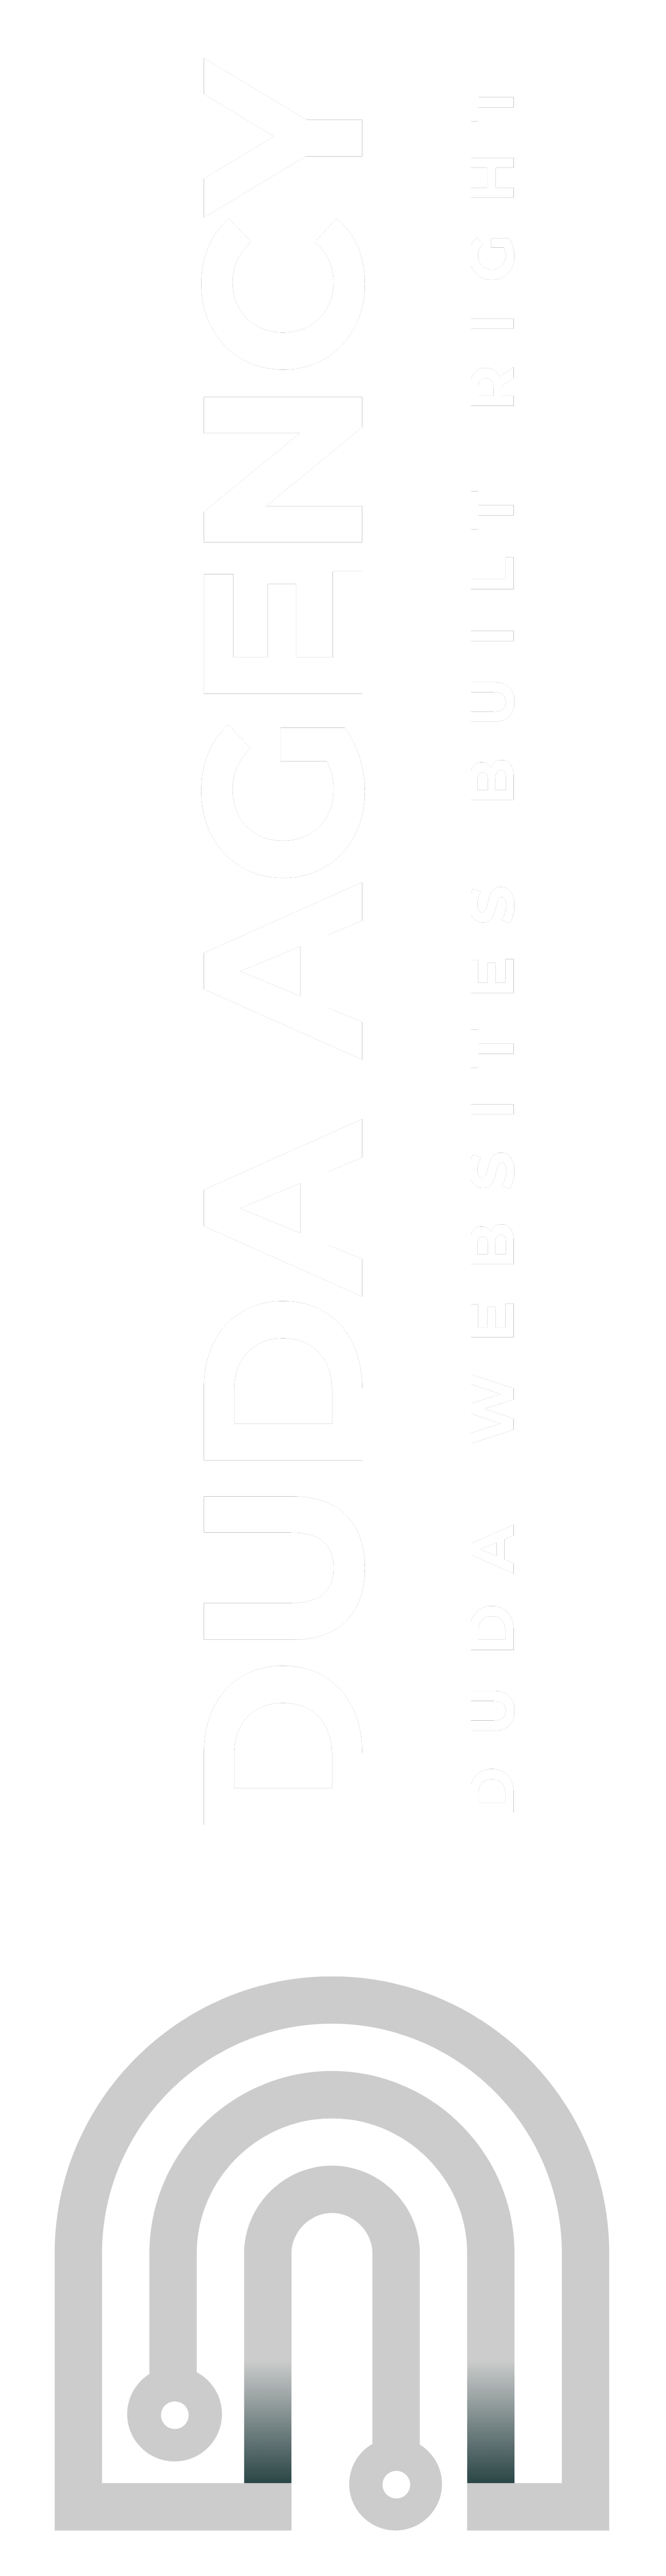 duda_website_agency_logo